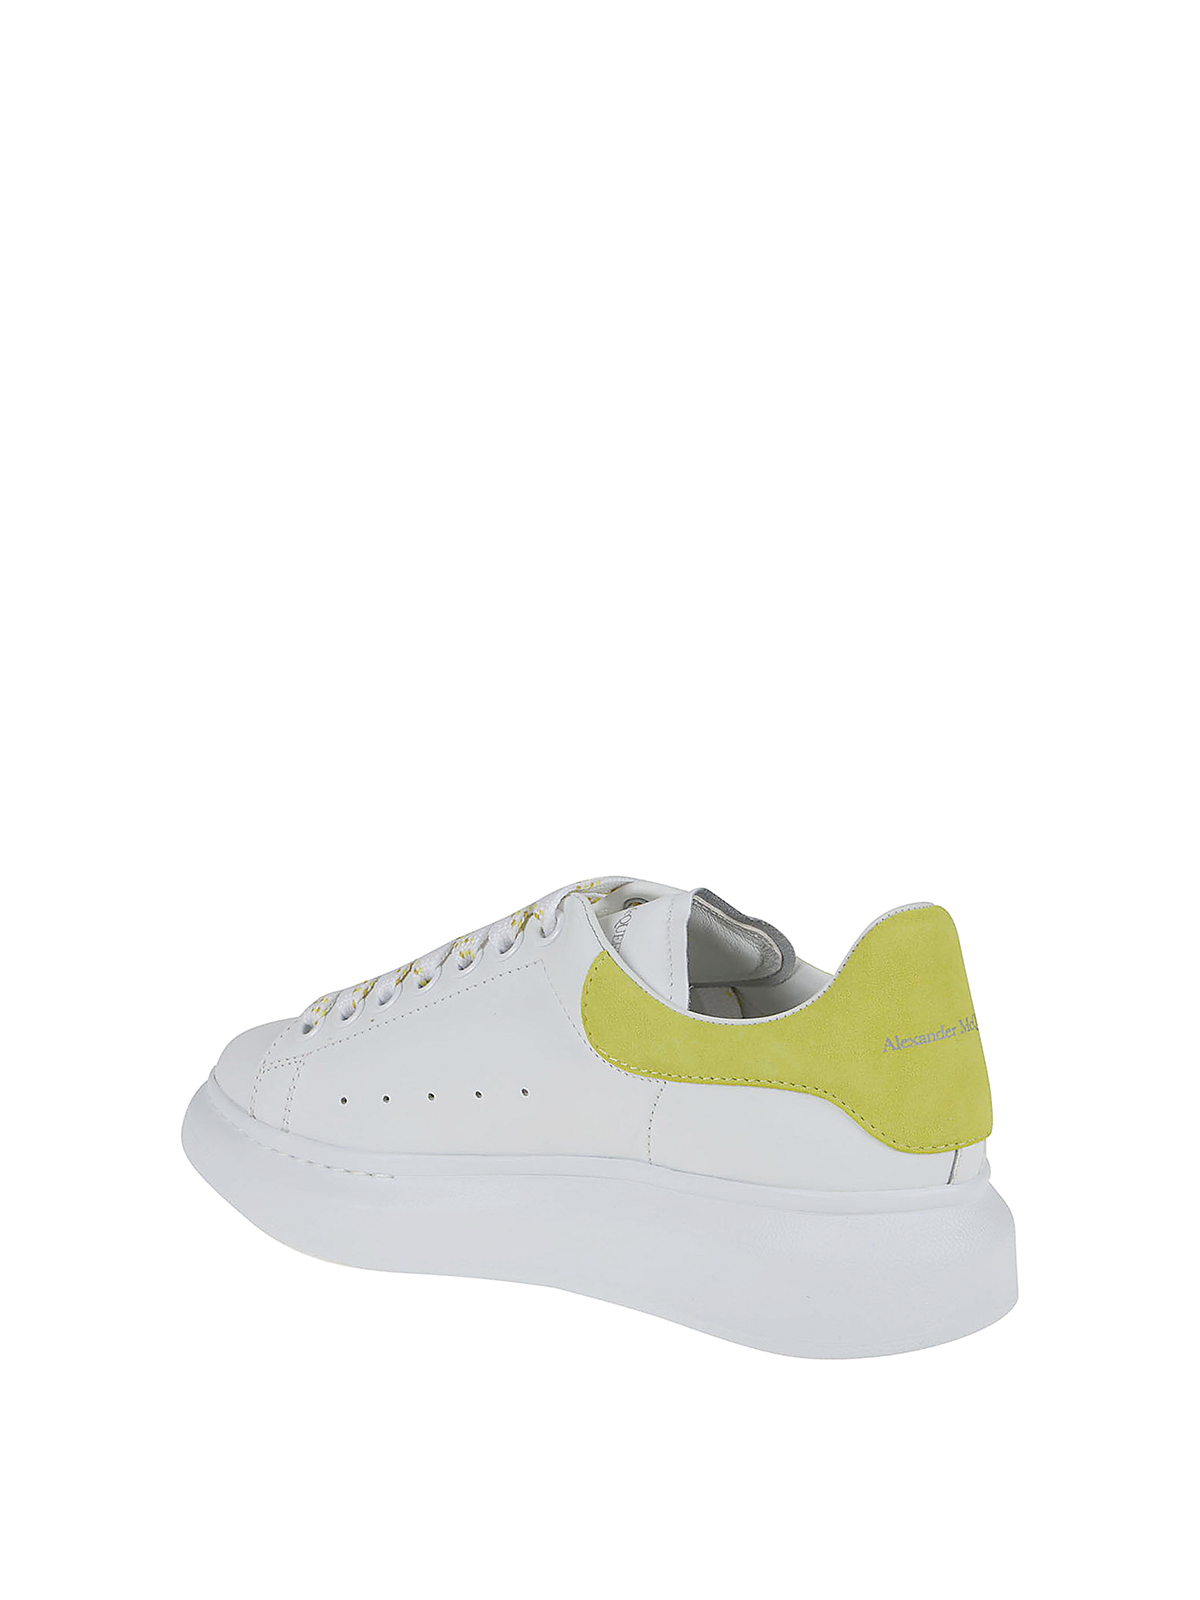 Chaussures de sport Alexander Mcqueen - Baskets - Blanc - 718139WHGP78963